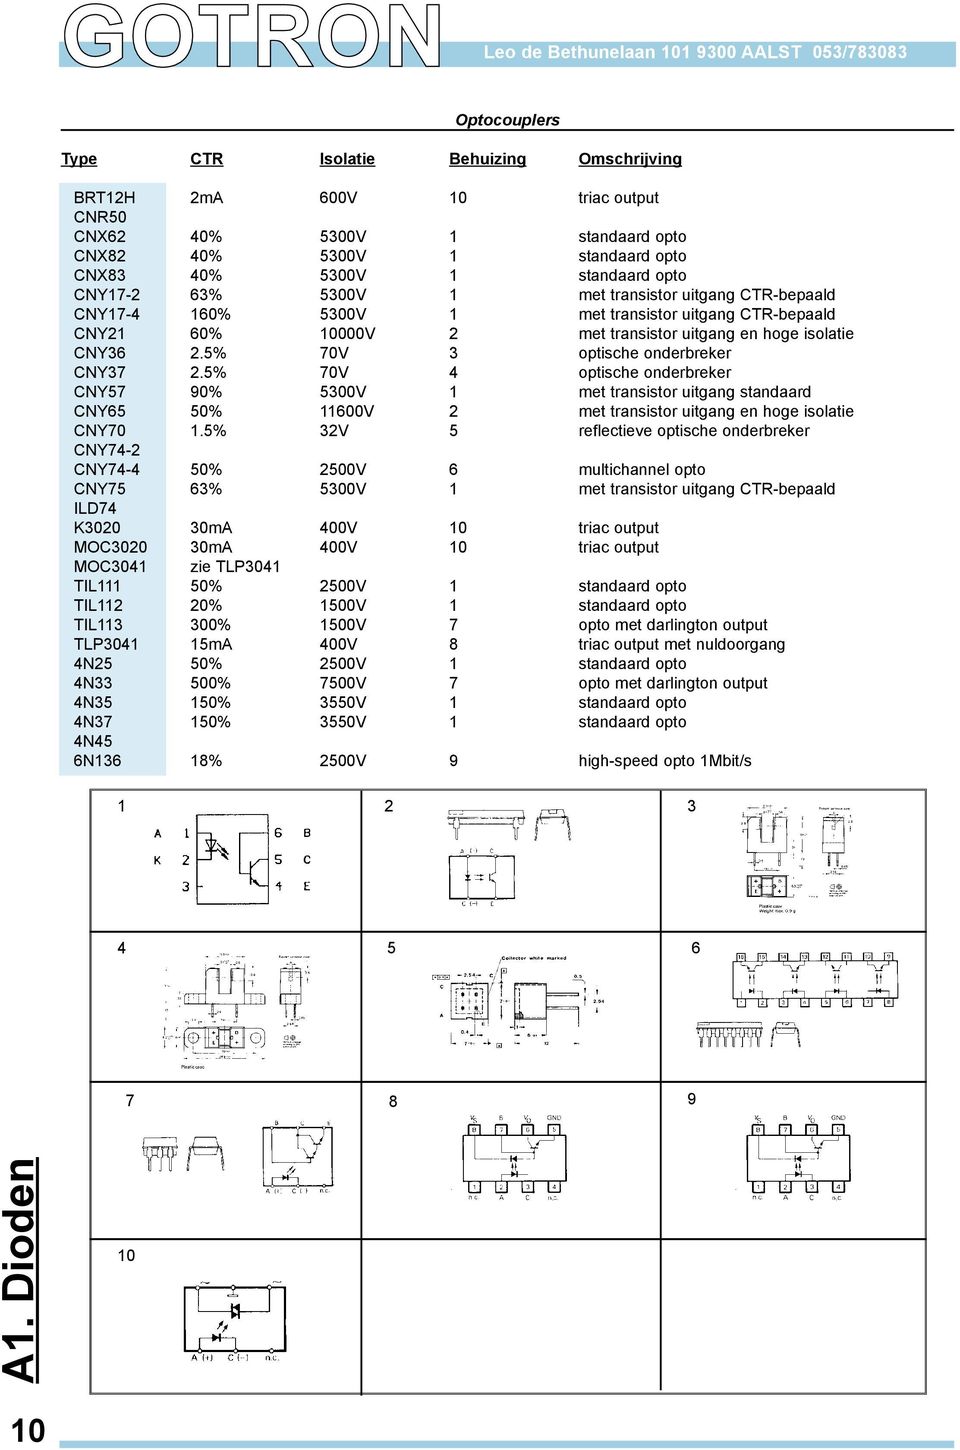 5% 70V 3 optische onderbreker CNY37 2.5% 70V 4 optische onderbreker CNY57 90% 5300V 1 met transistor uitgang standaard CNY65 50% 11600V 2 met transistor uitgang en hoge isolatie CNY70 1.